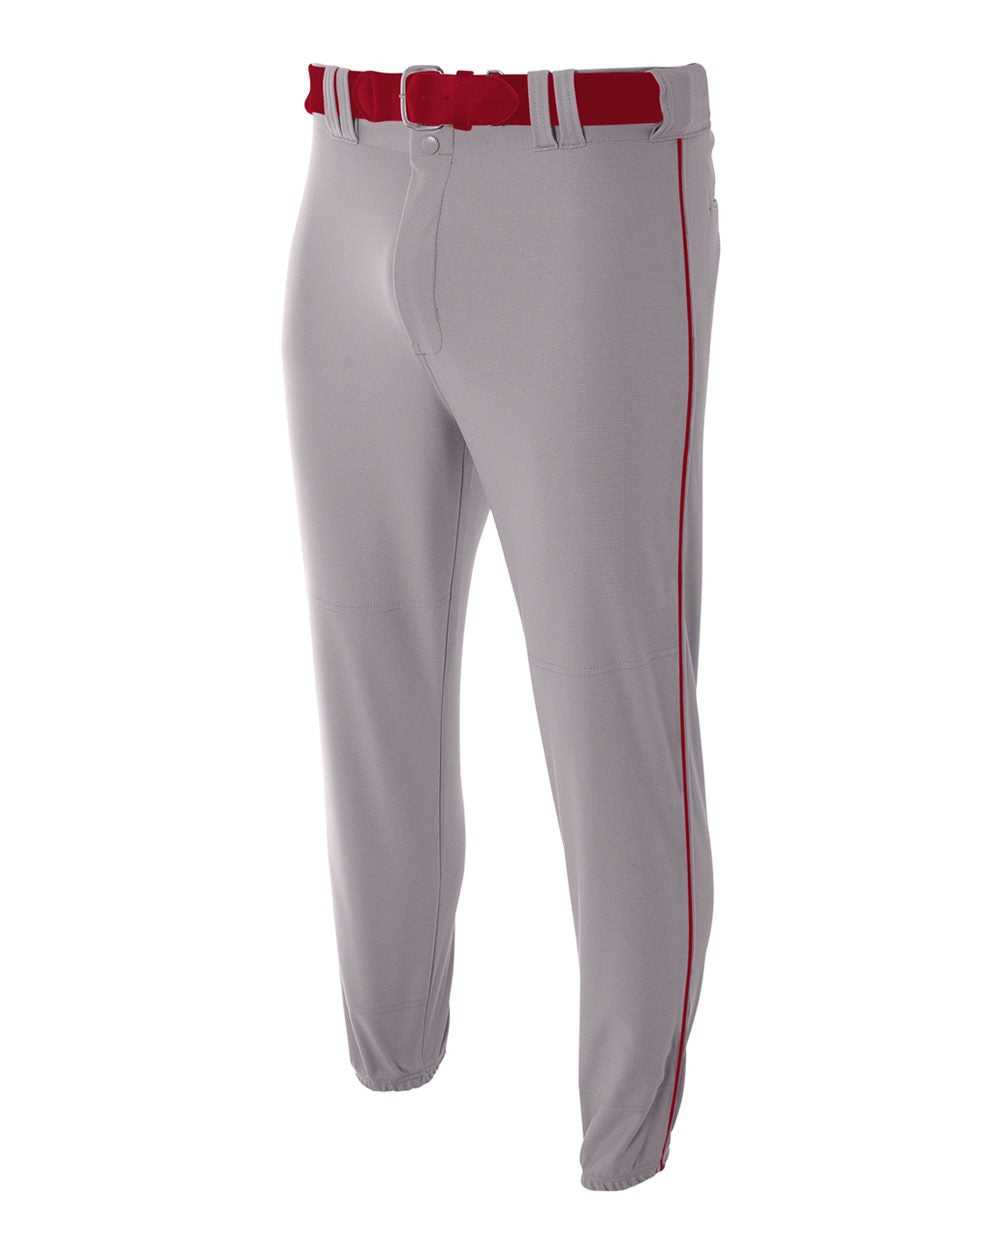 A4 NB6178 Youth Pro Style Elastic Bottom Baseball Pant - Gray Cardinal - HIT a Double